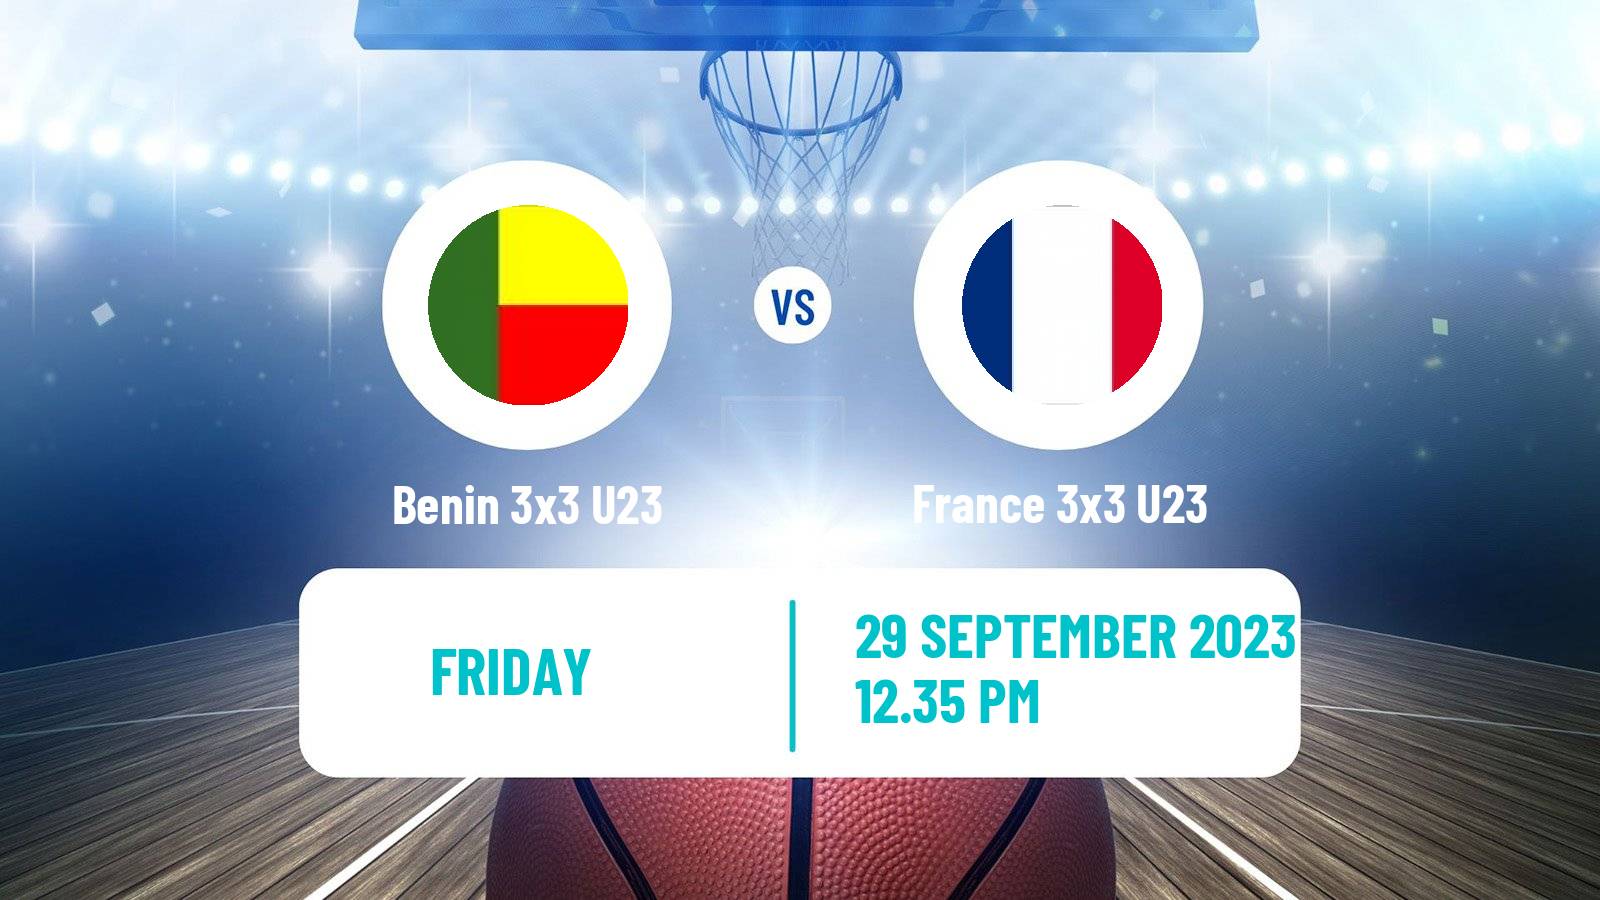 Basketball World Cup Basketball 3x3 U23 Benin 3x3 U23 - France 3x3 U23